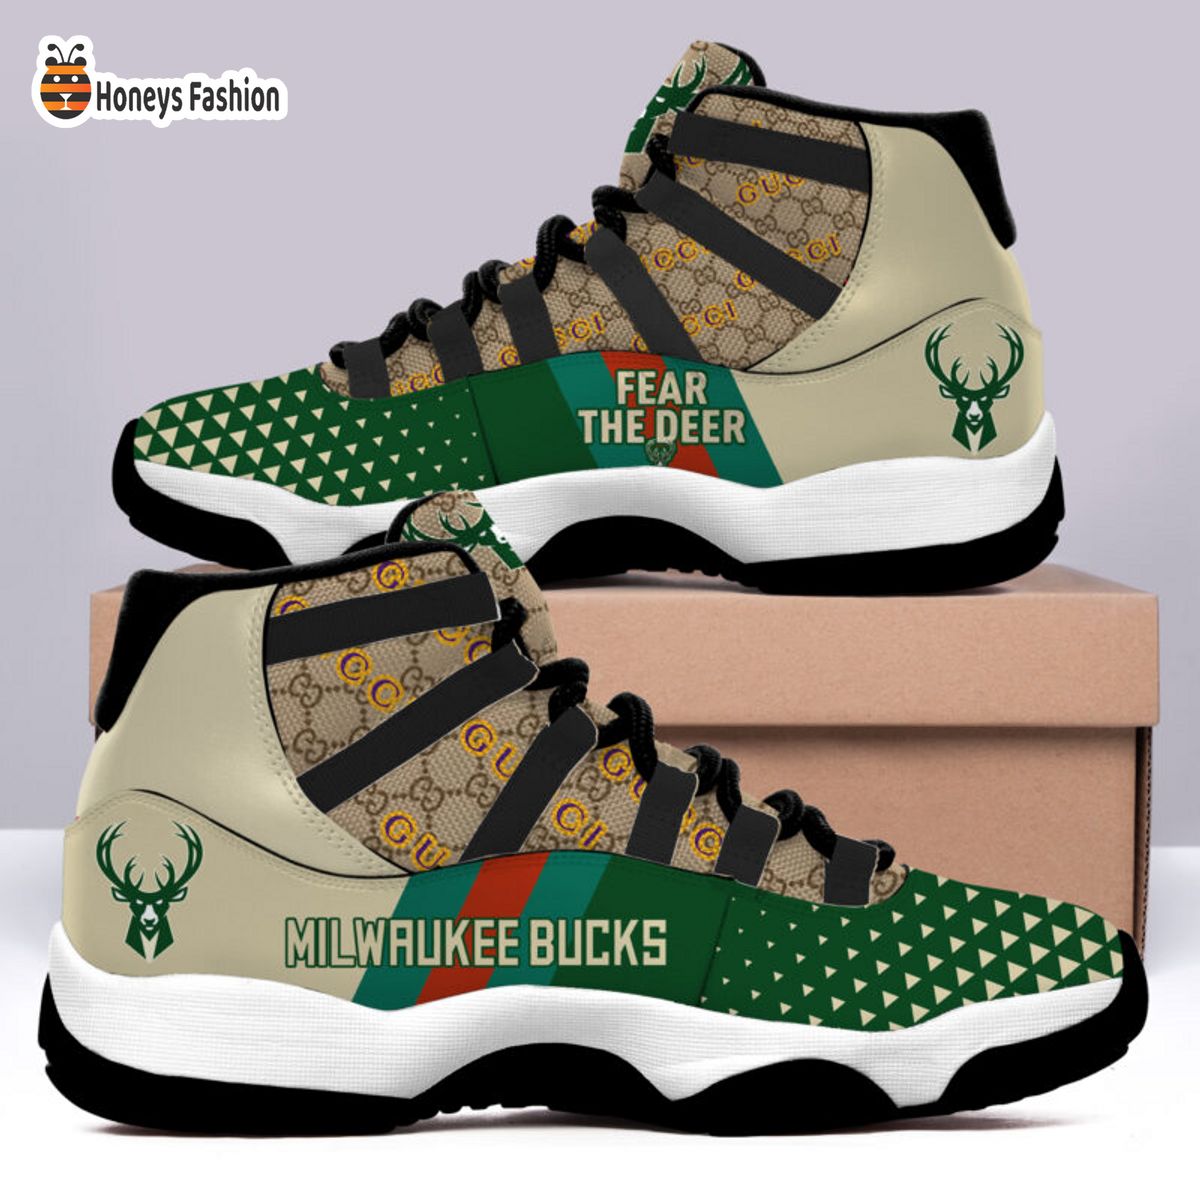 Milwaukee Bucks x Gucci Air Jordan 11 Sneaker